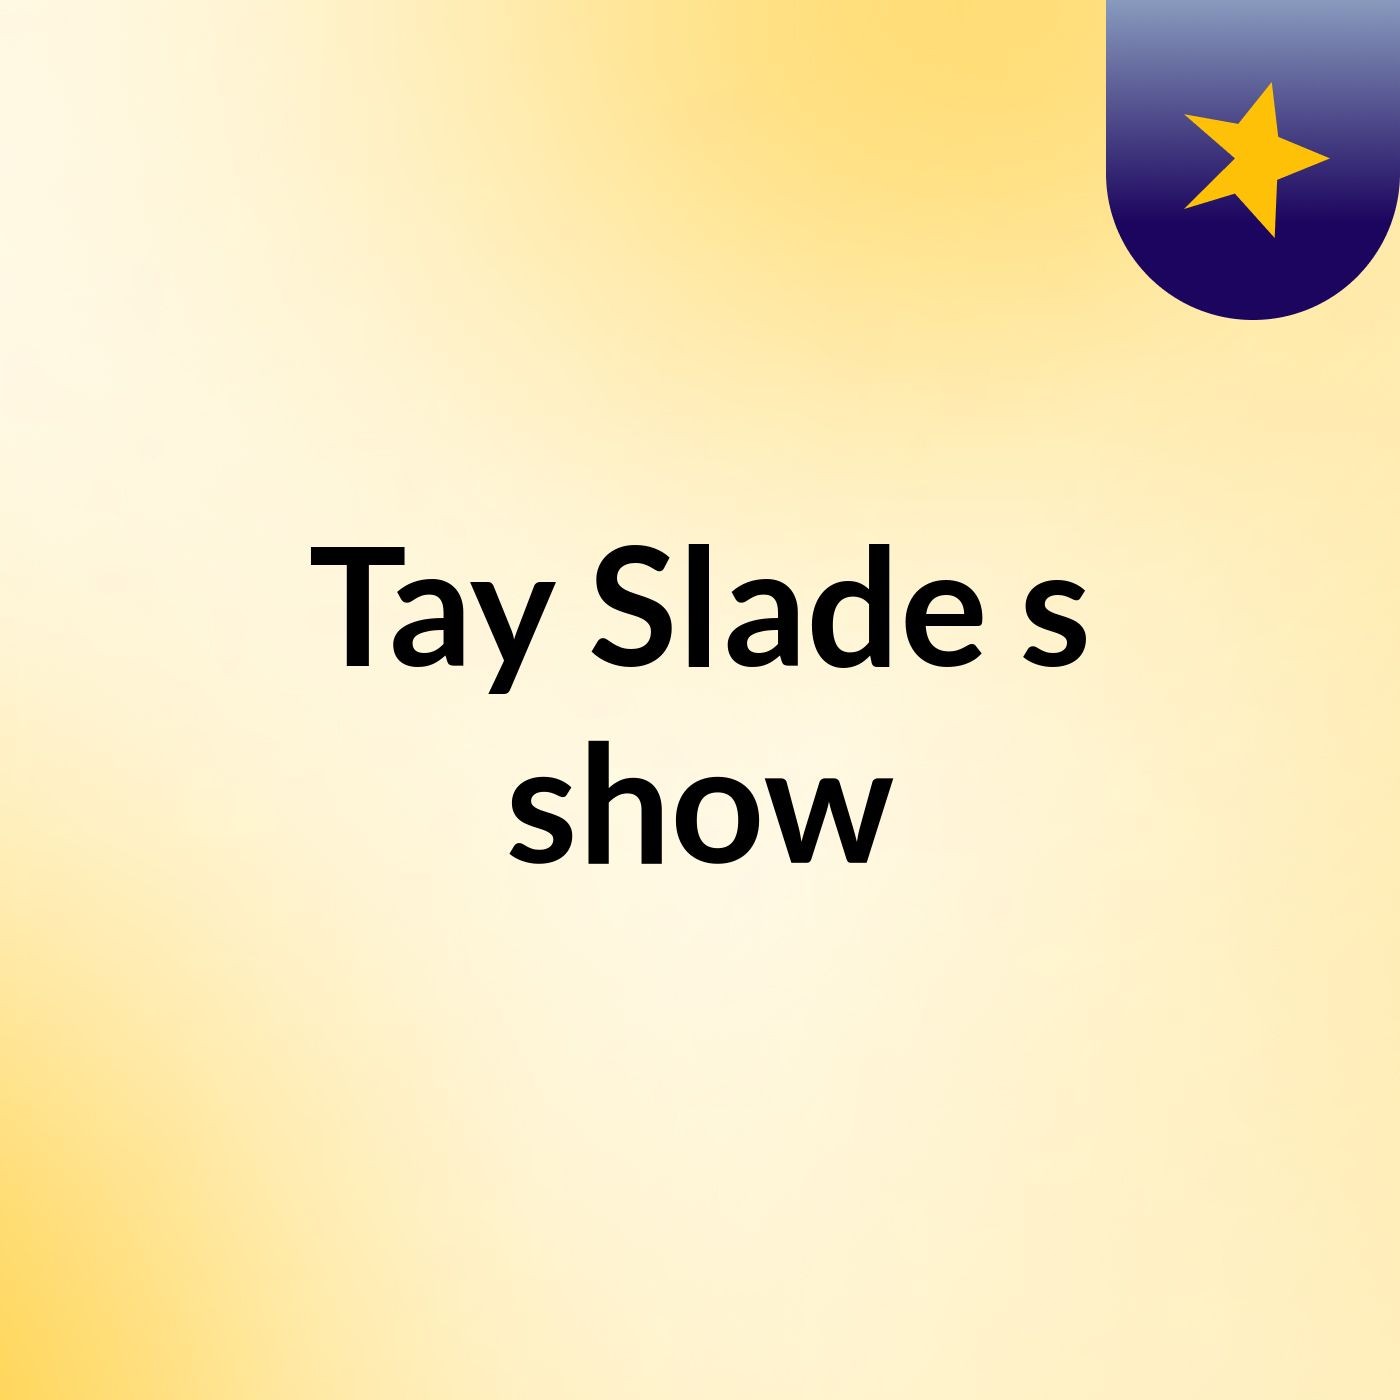 Tay Slade's show